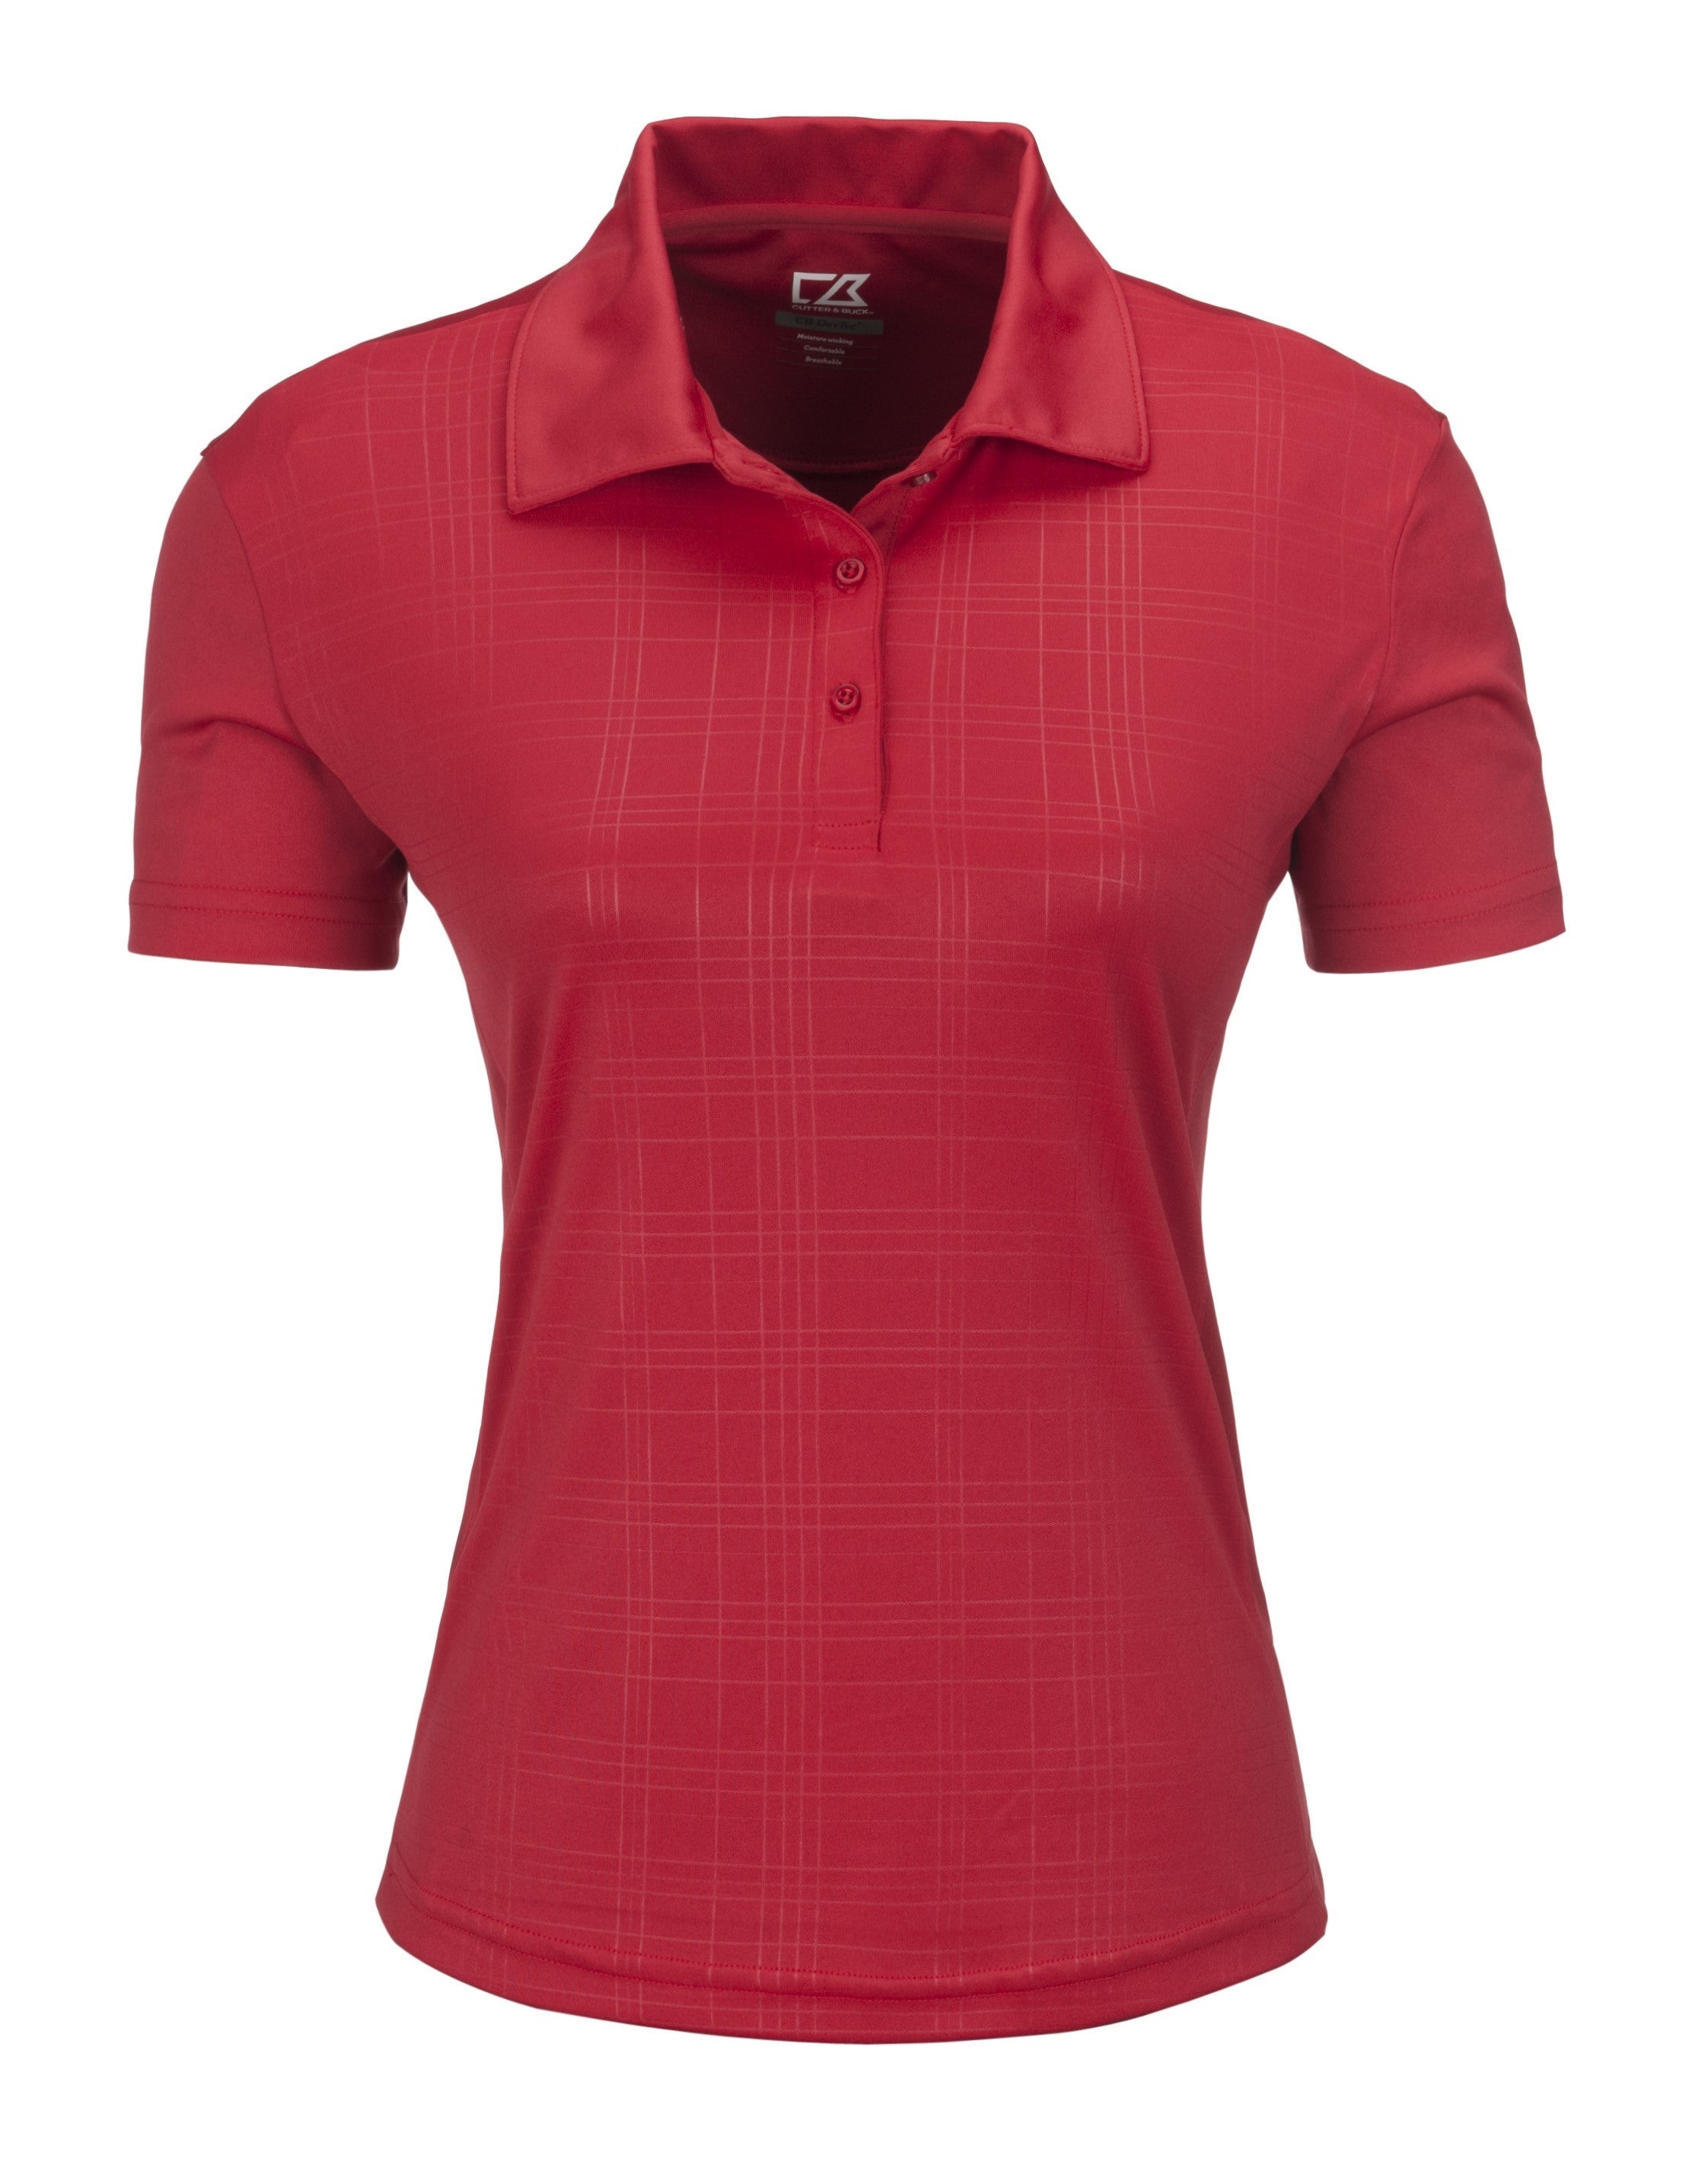 Ladies Sullivan Golf Shirt - Light Blue Only-2XL-Red-R